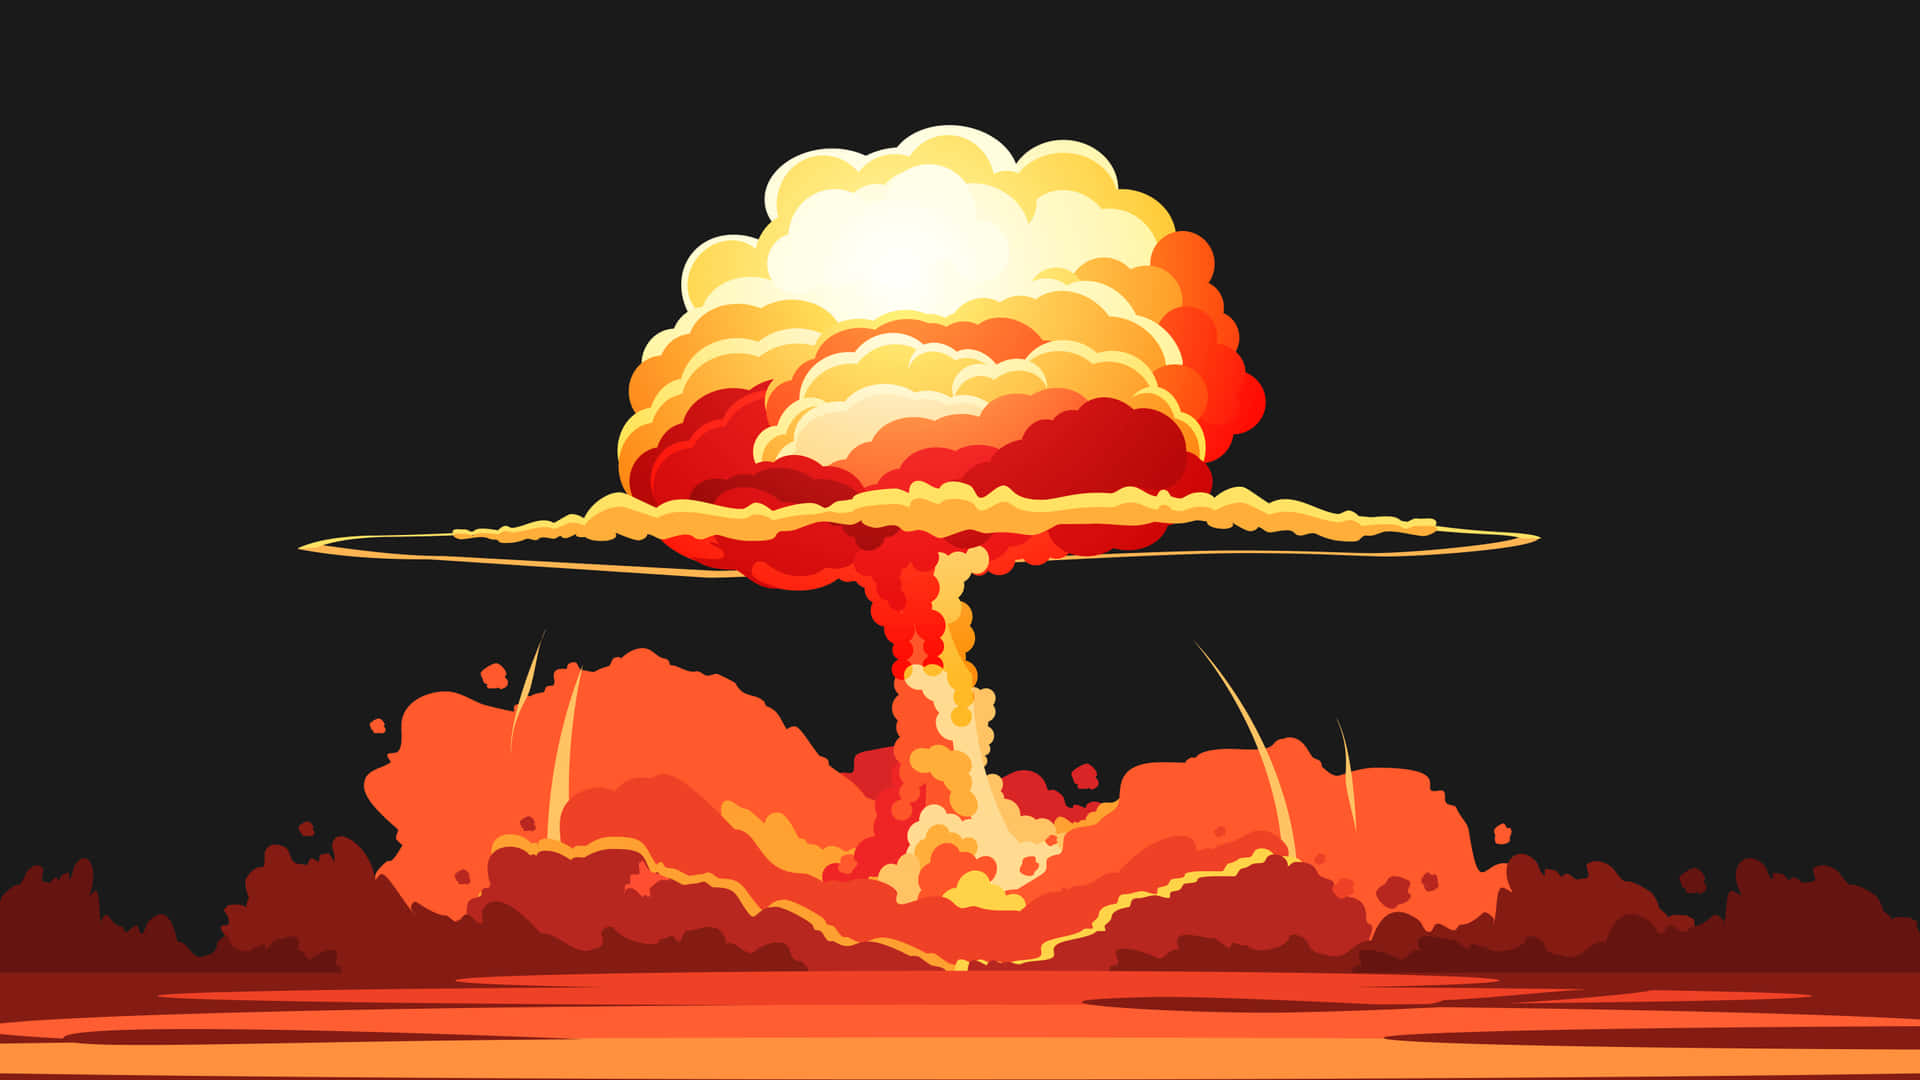 Nuclear Explosion Illustration Wallpaper